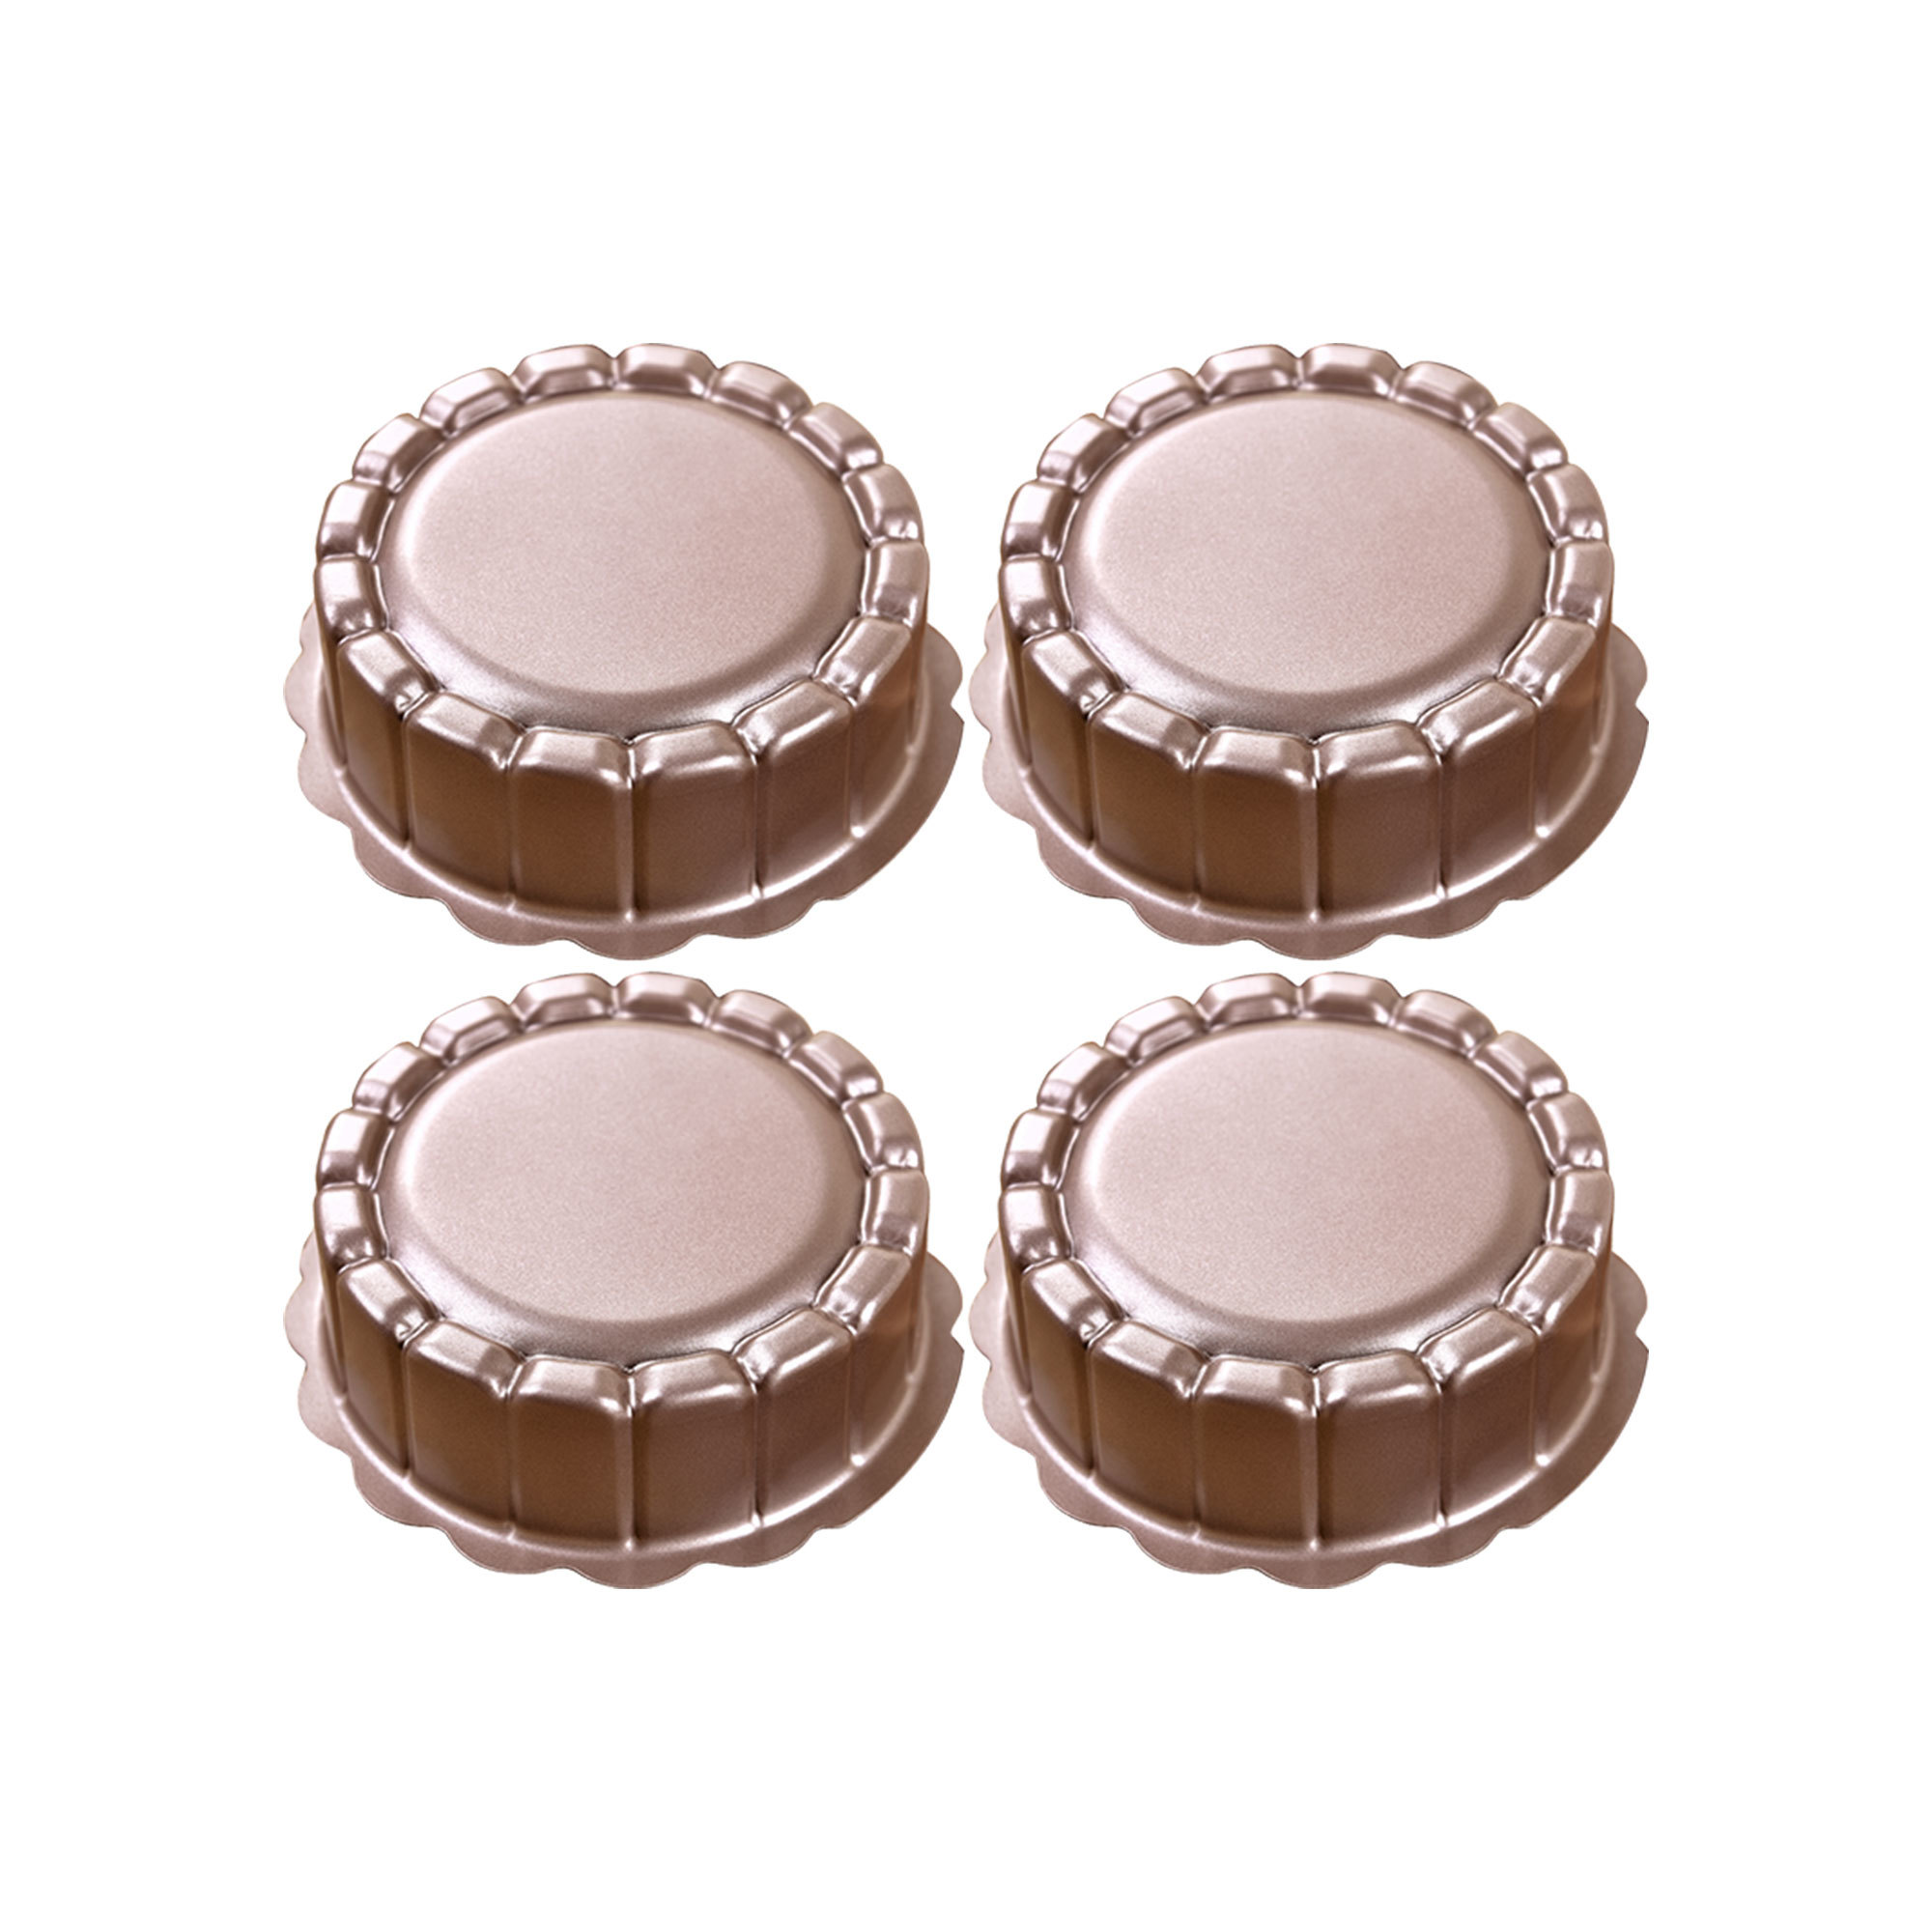 Set of 4 Tiramisu Cake Molds 3622